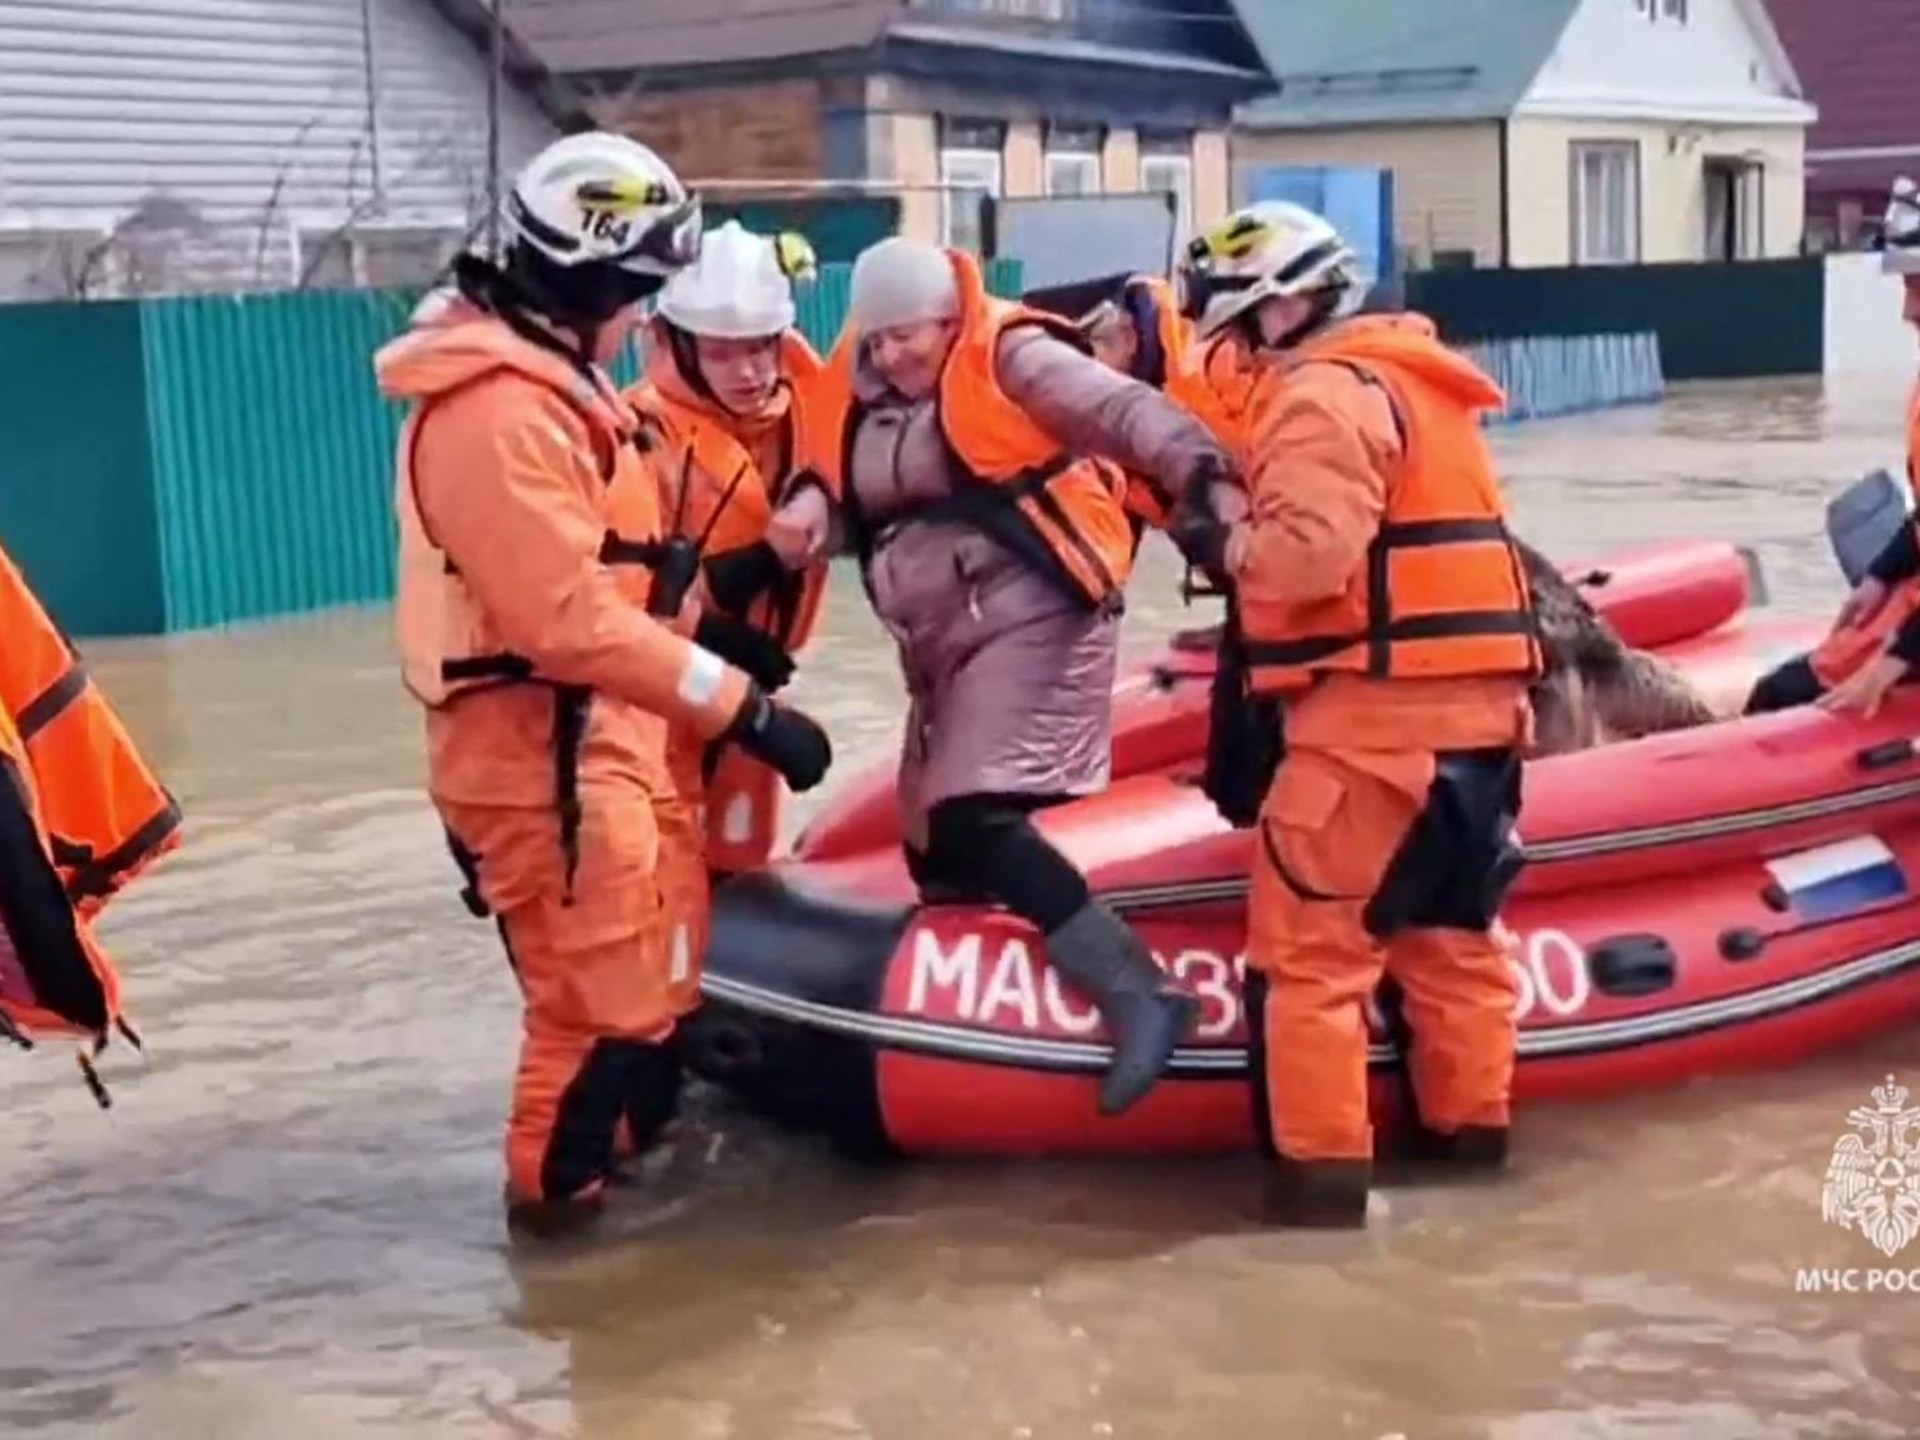 Russia evacuates 4,000 people after dam bursts, floods near Kazakh border